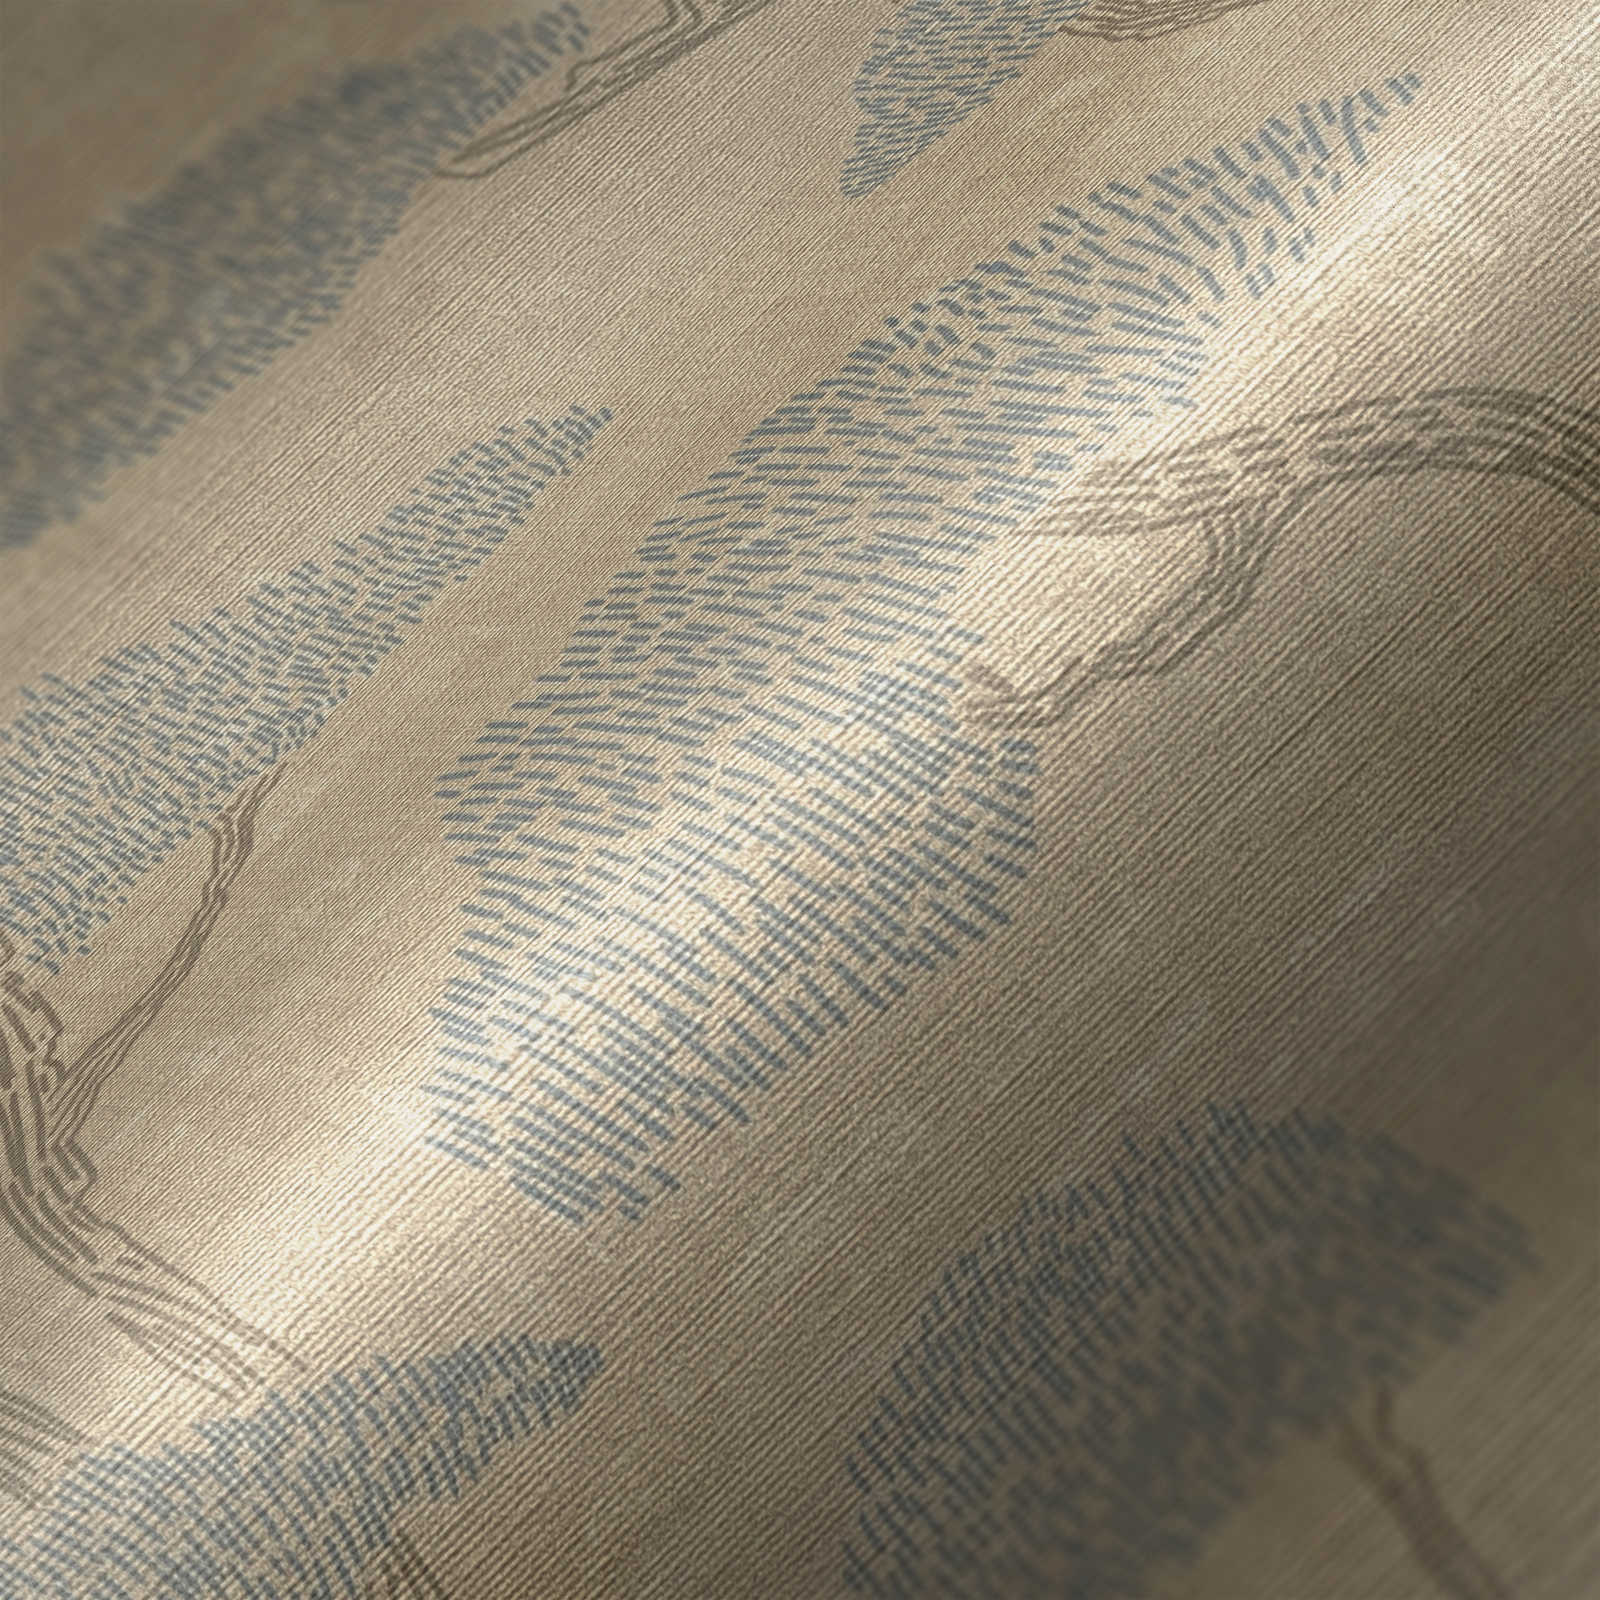             Papel pintado beige con motivos abstractos de pinos
        